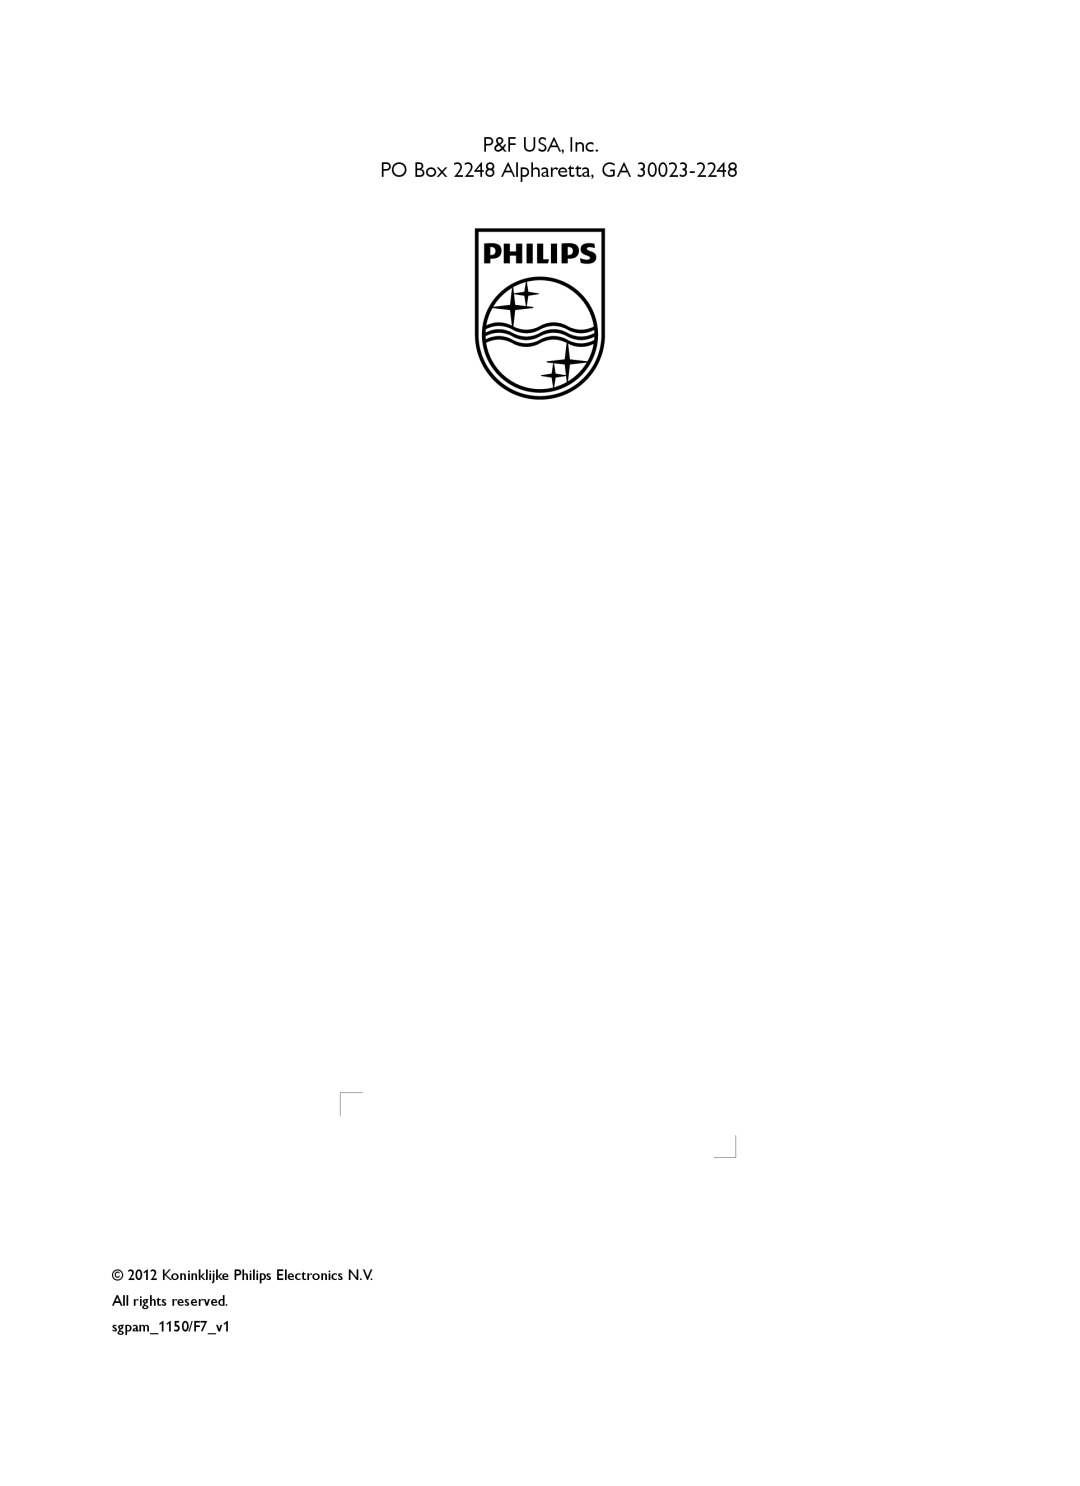 Philips CSS2123B/F7 user manual P&F USA, Inc PO Box 2248 Alpharetta, GA 